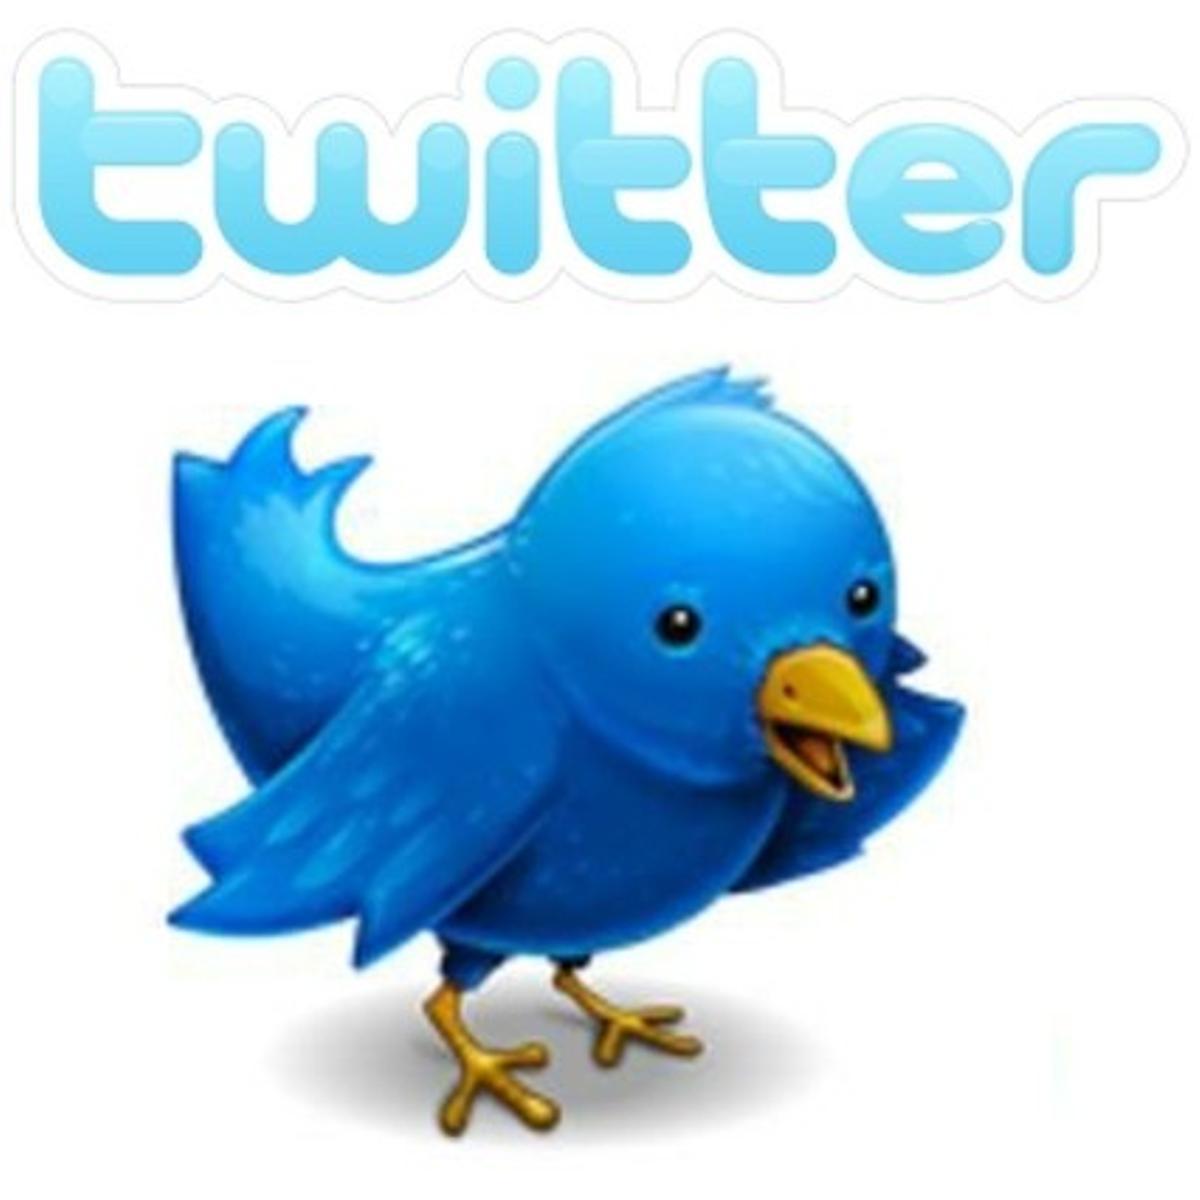 Logotip de Twitter, la famosa xarxa de ’microblogging’.